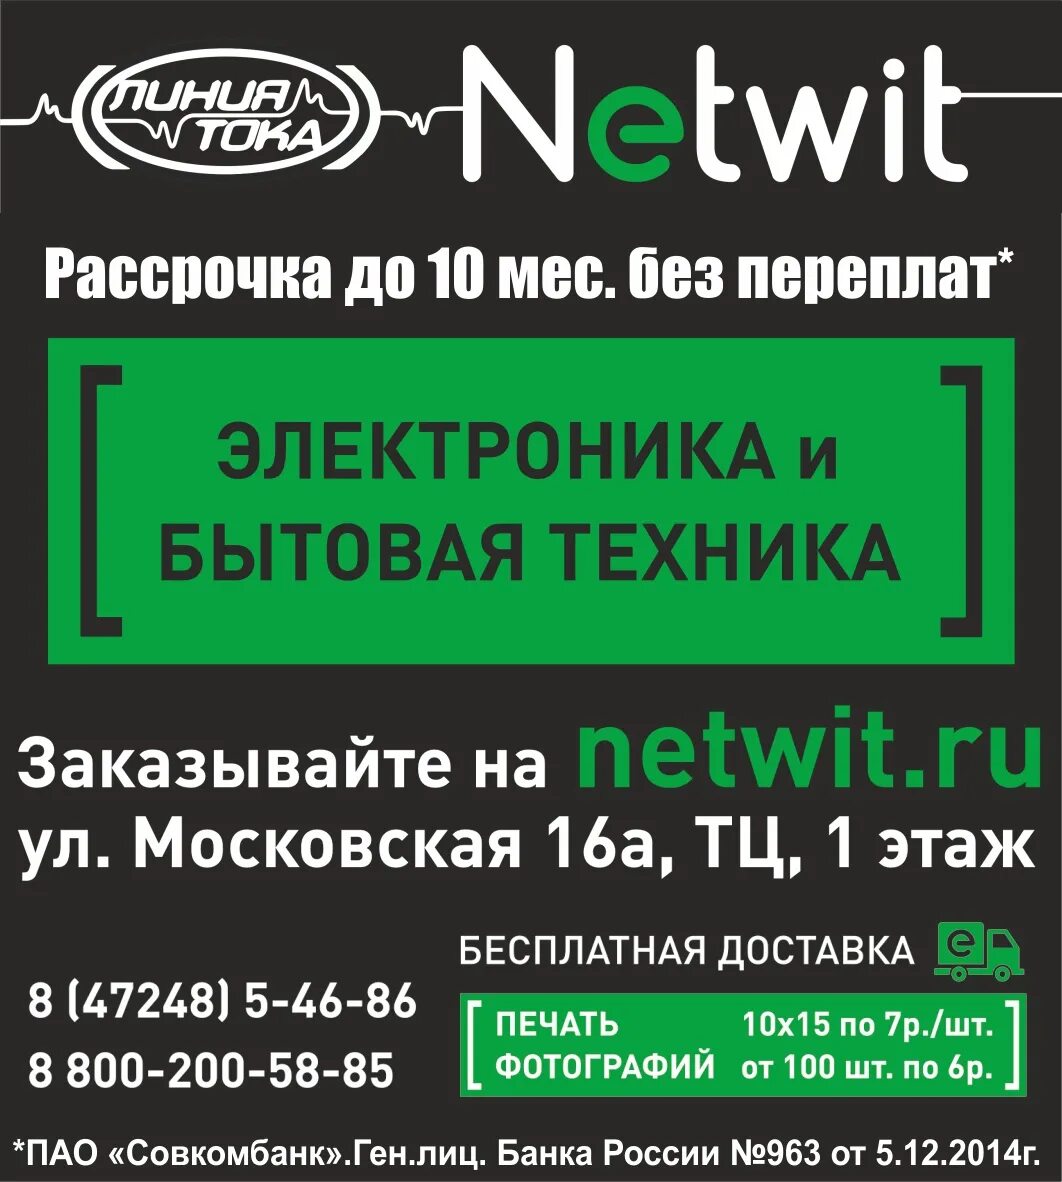 Net wit. Линия тока Шебекино. Линия тока Шебекино каталог. NETWIT logo.